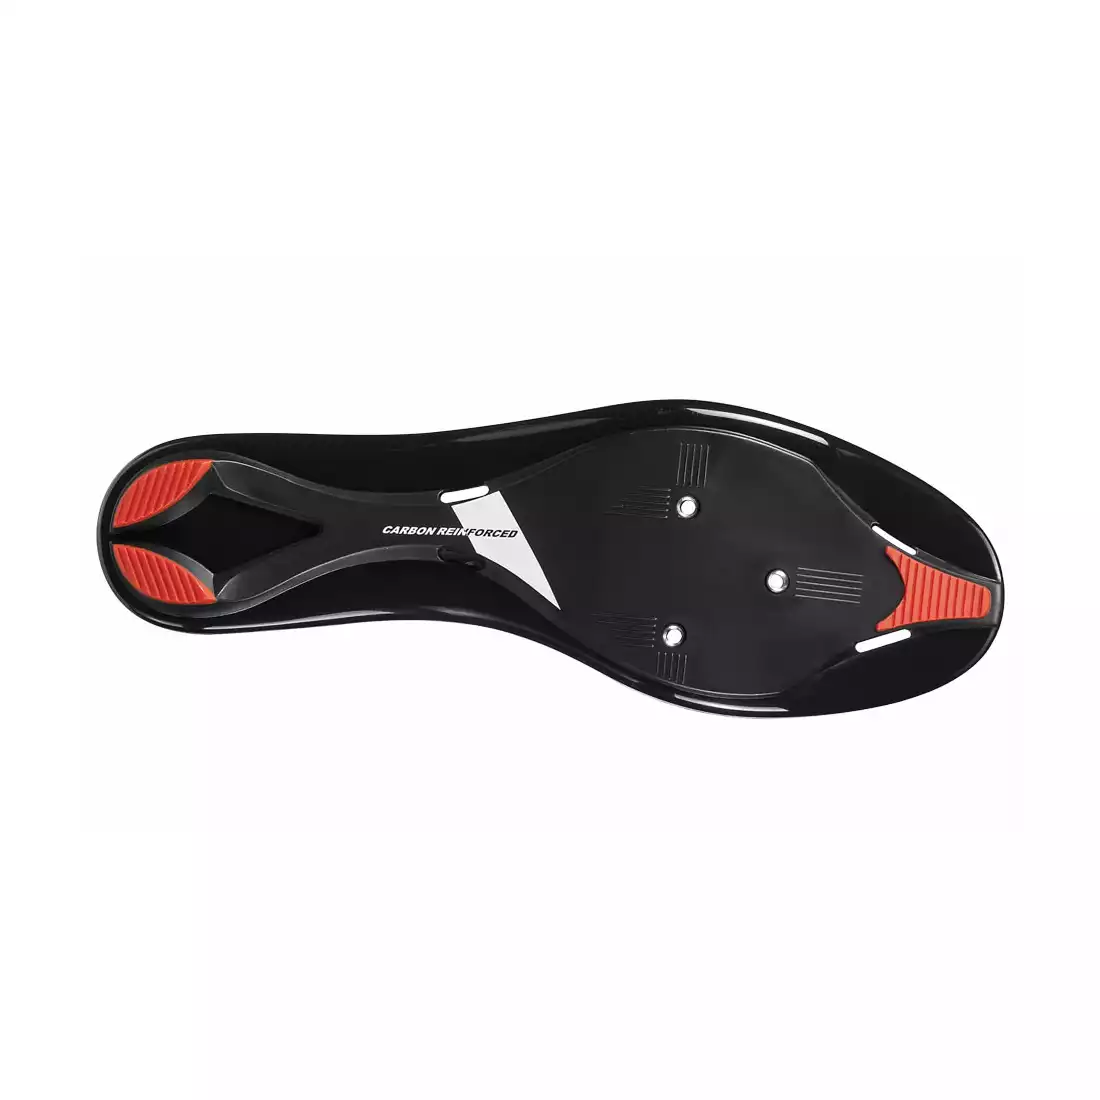 CRONO ARTICA ROAD - zimowe buty rowerowe szosowe - kolor: Czarny